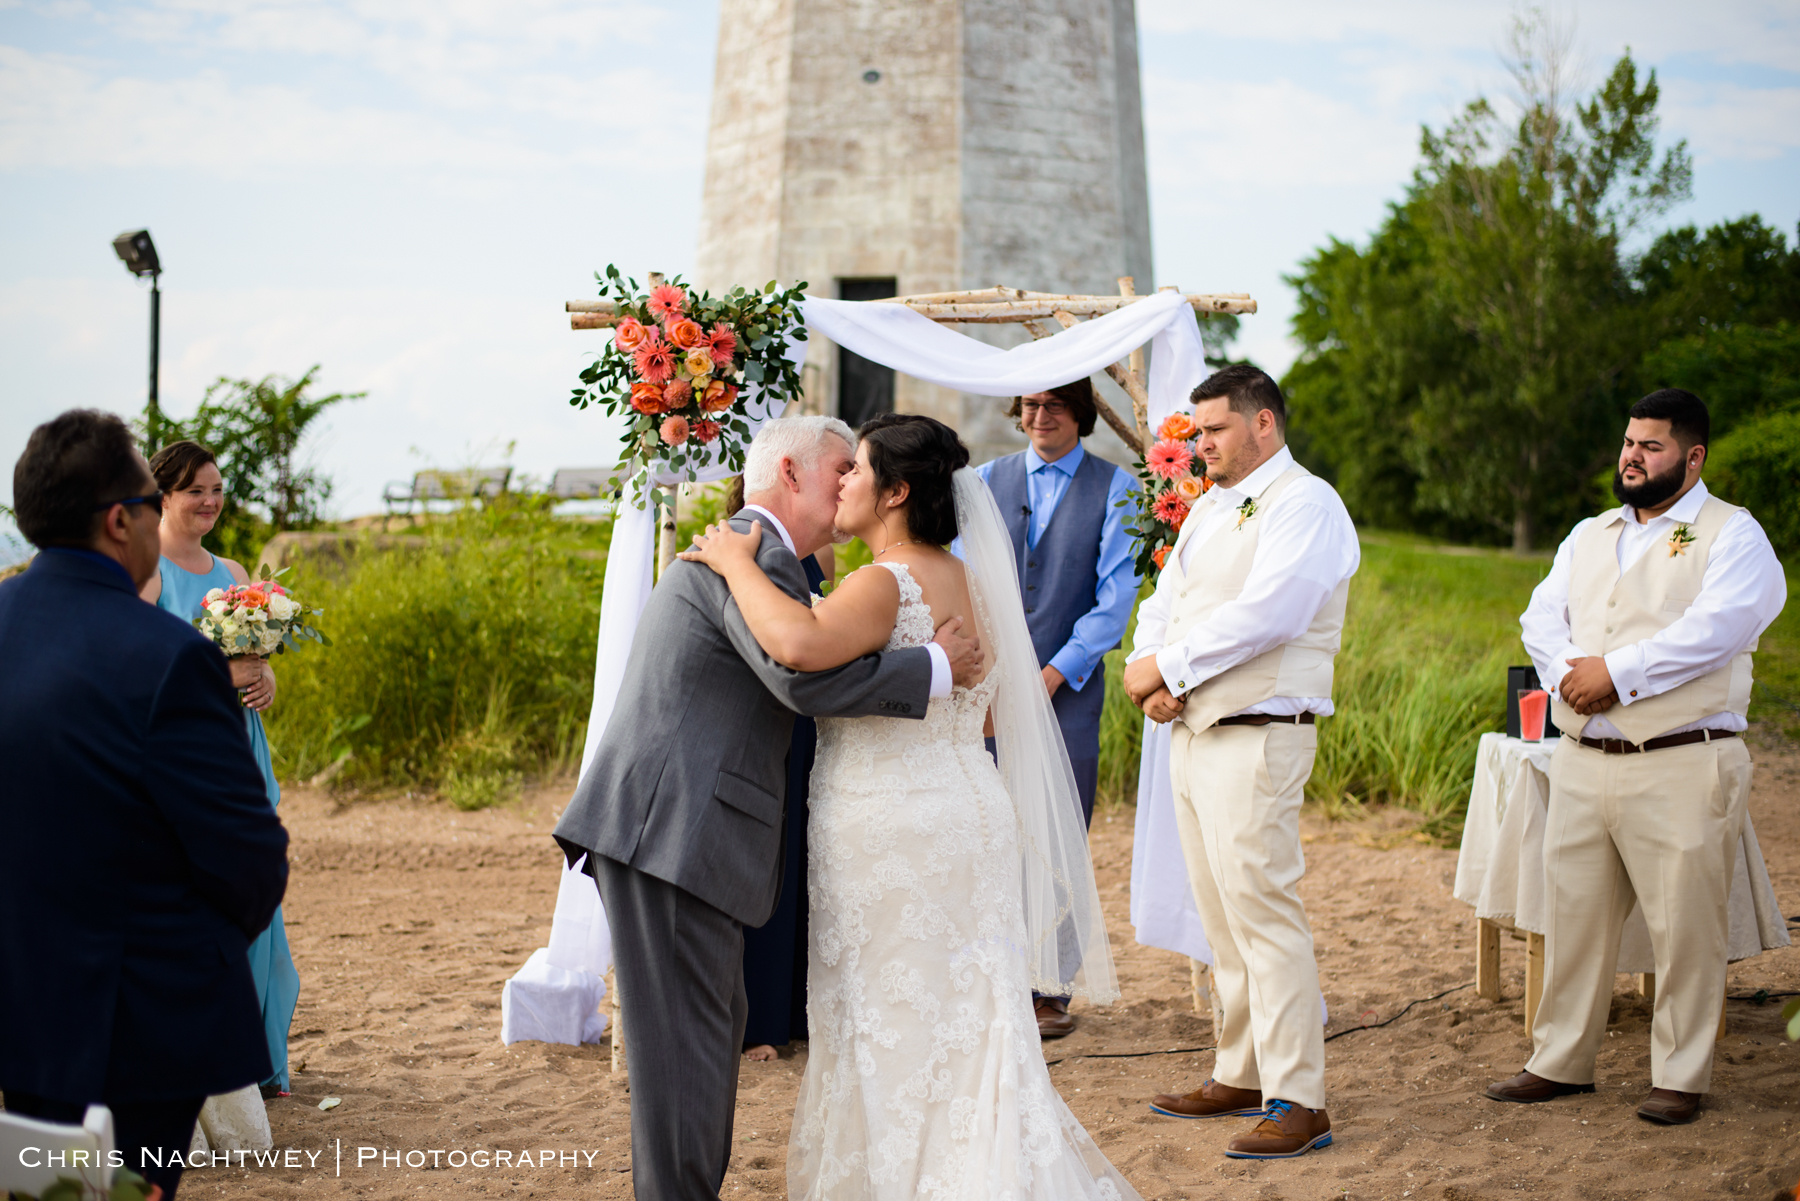 photos-wedding-lighthouse-point-park-carousel-new-haven-chris-nachtwey-photography-2019-25.jpg